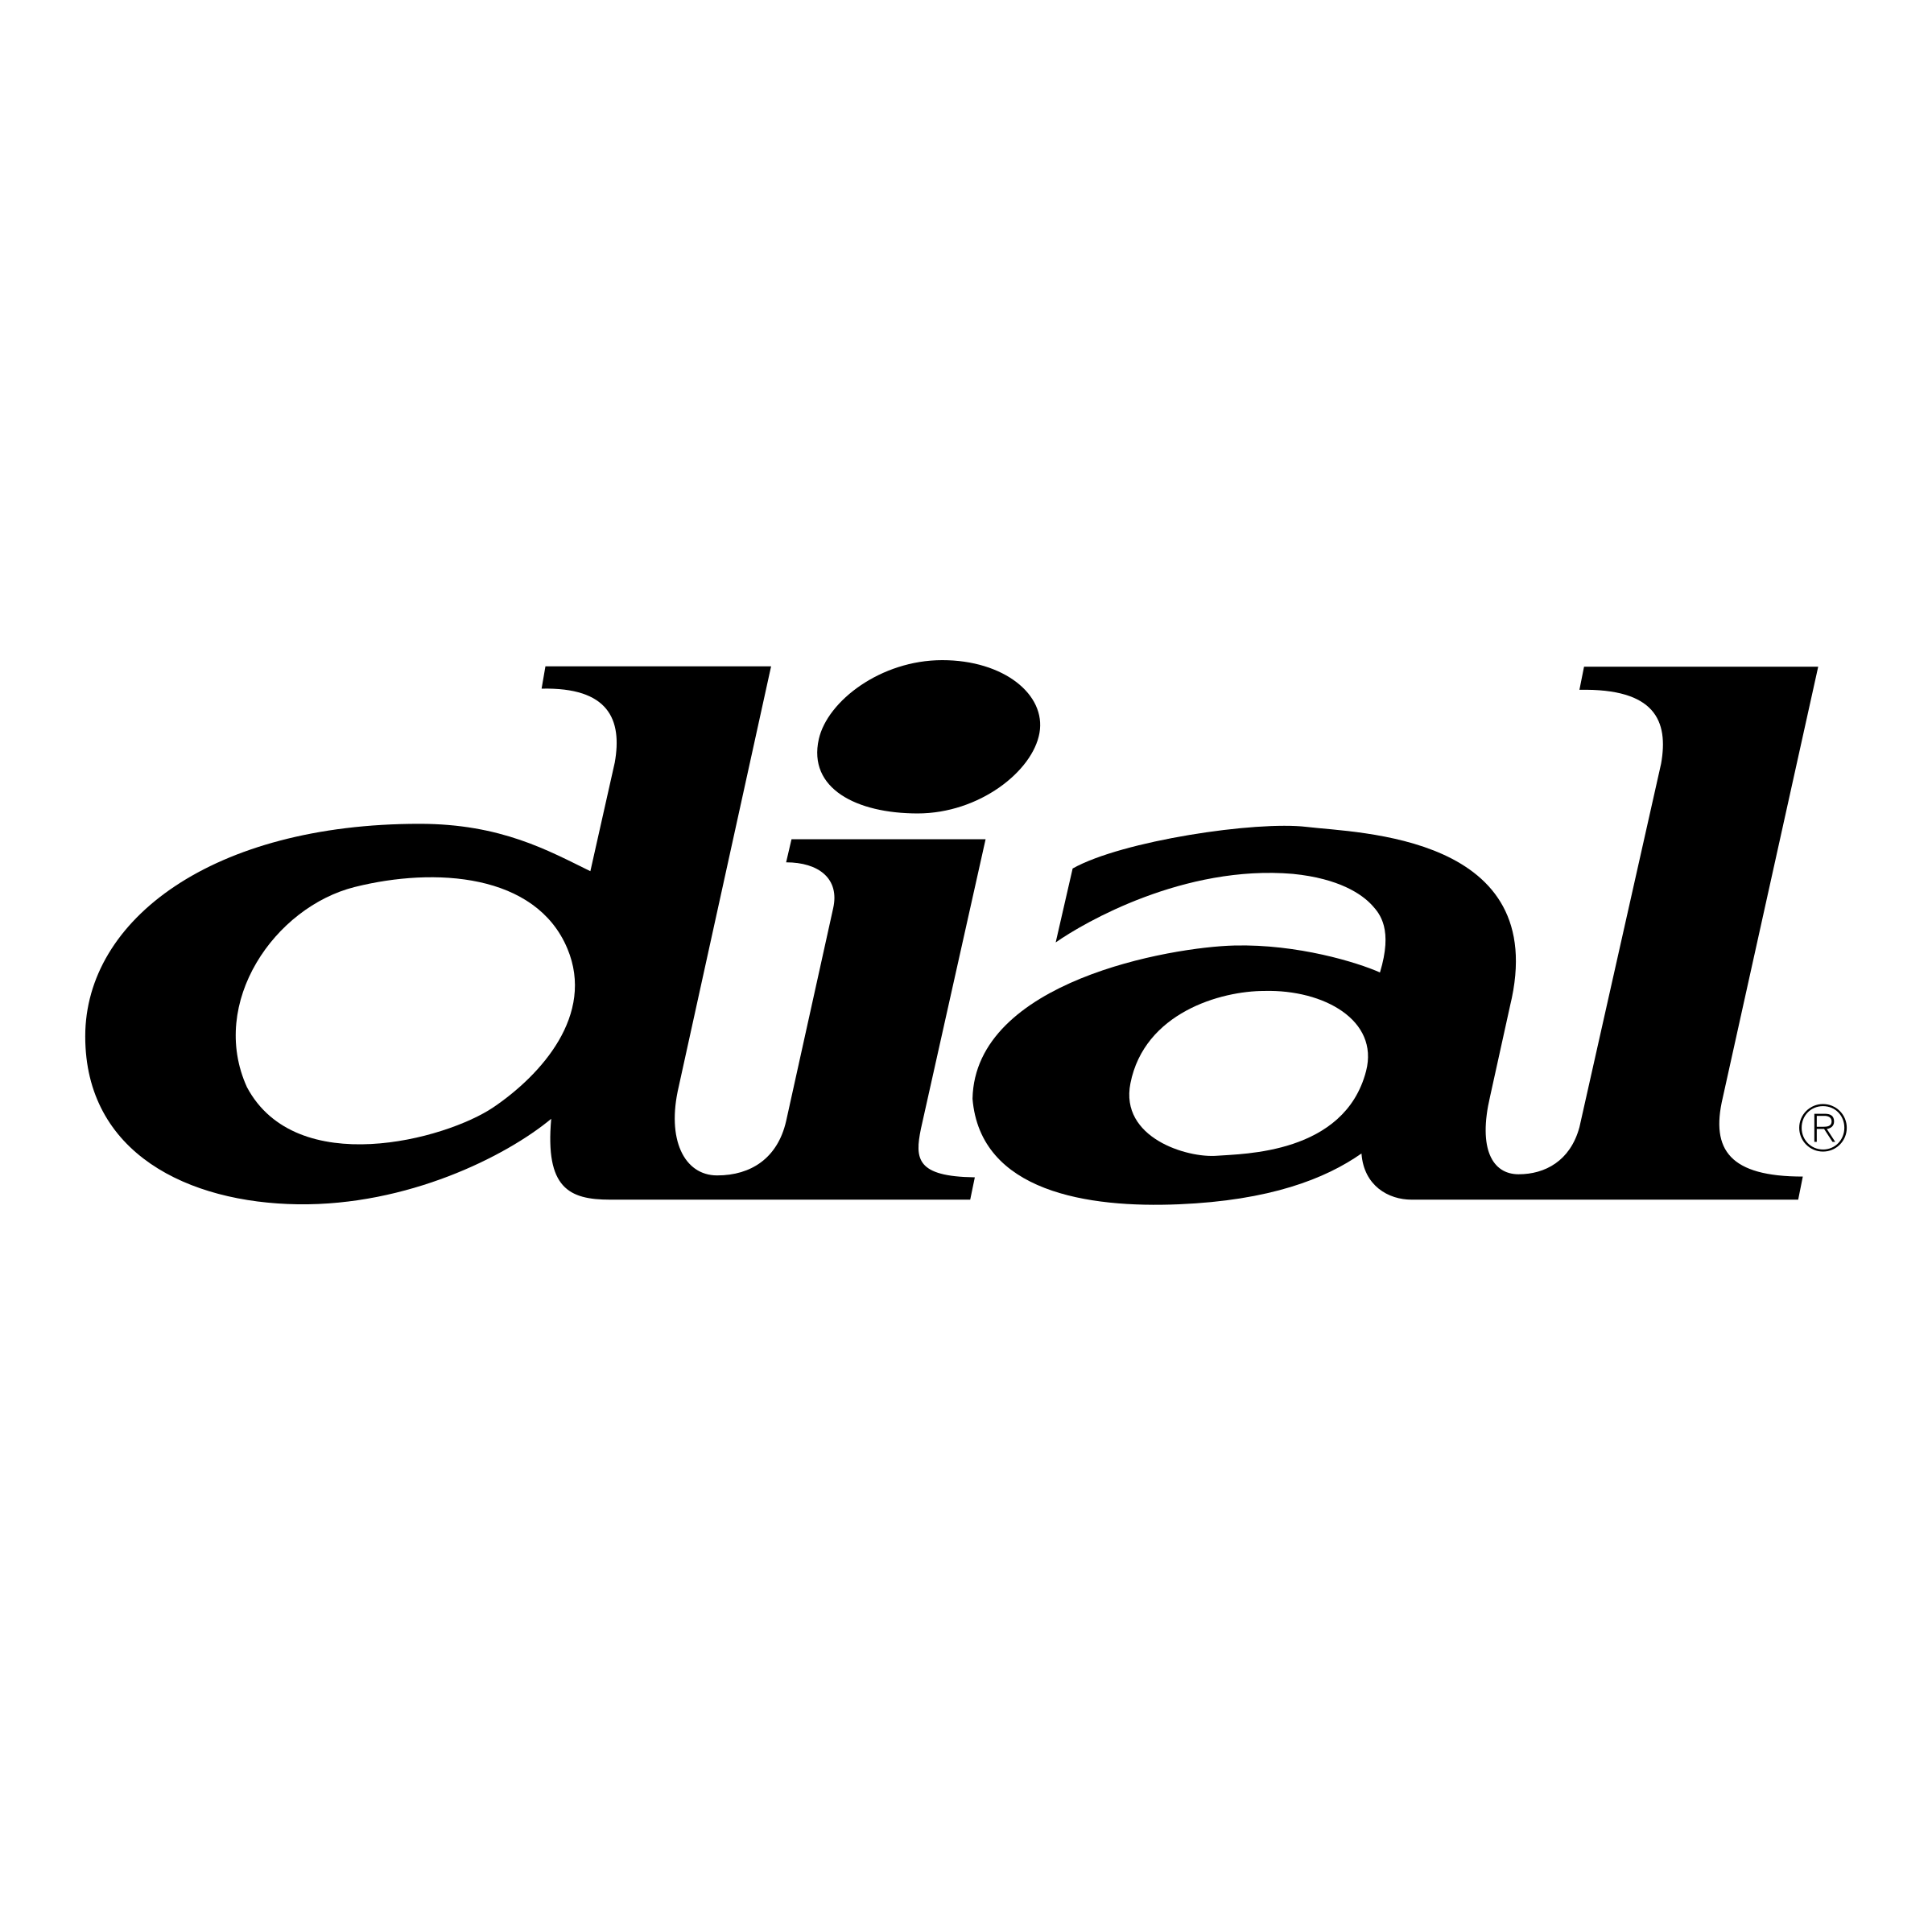 Dial Logo - Dial Logo PNG Transparent & SVG Vector - Freebie Supply